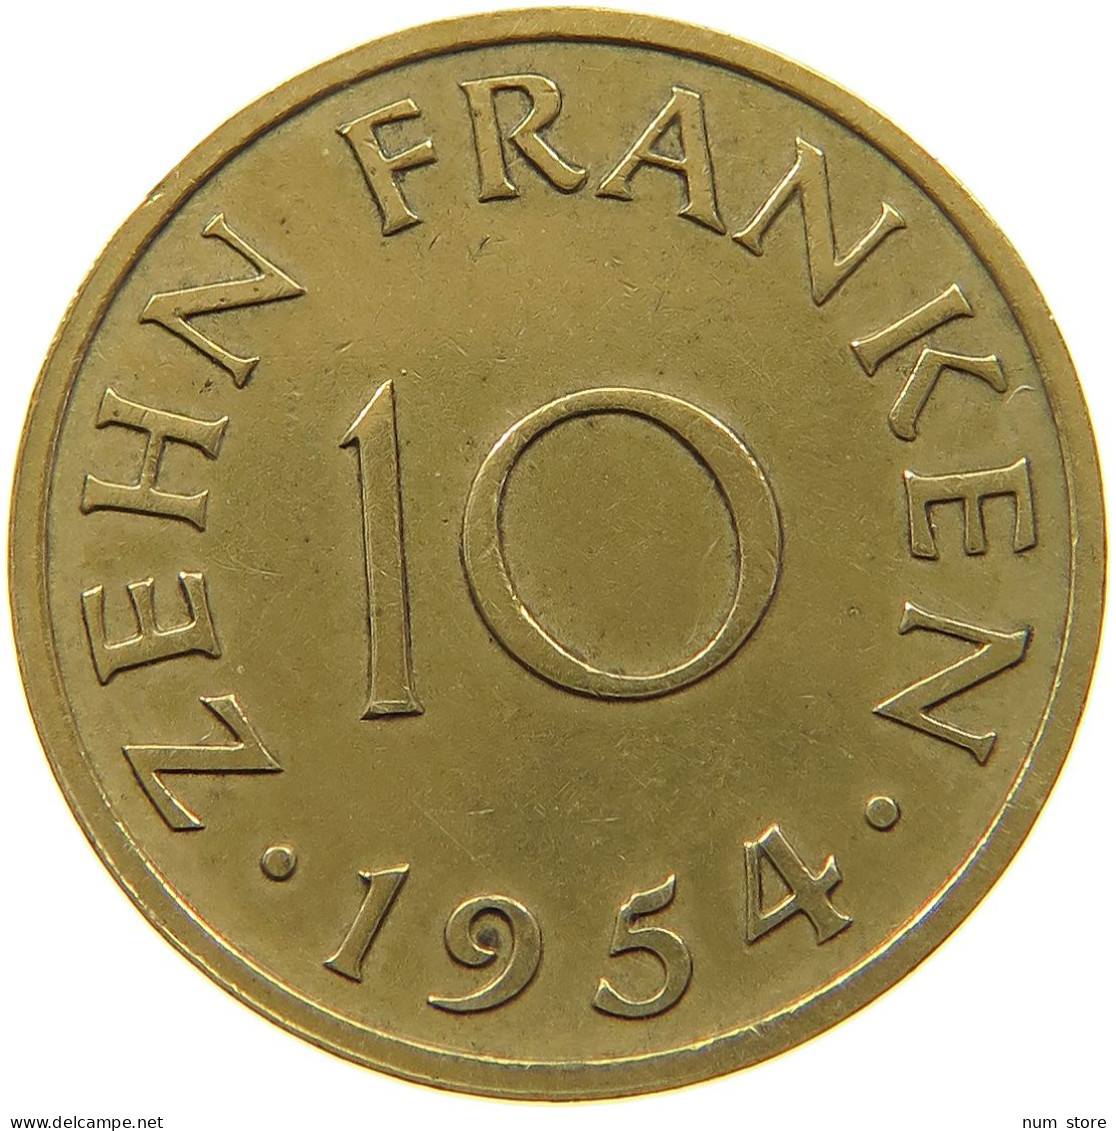 GERMANY WEST 10 FRANKEN 1954 SAARLAND #a047 0509 - 10 Franken